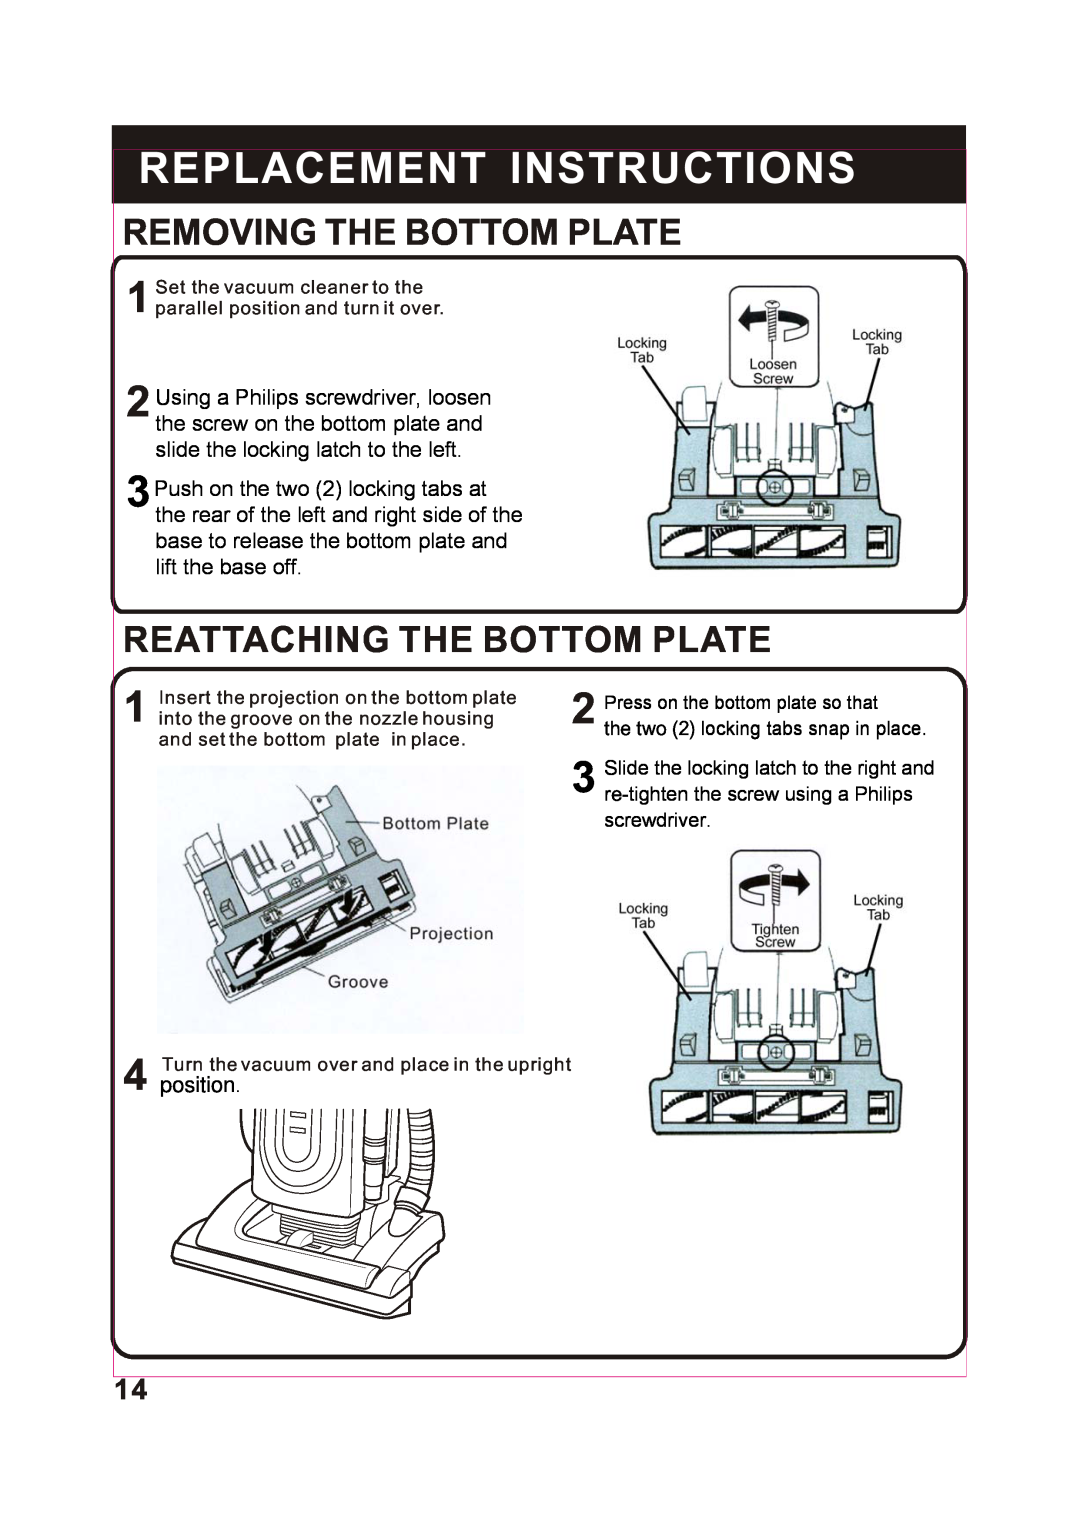 Fantom Vacuum FM743H Removing The Bottom Plate, Reattaching The Bottom Plate, Replacement Instructions, screwdriver 